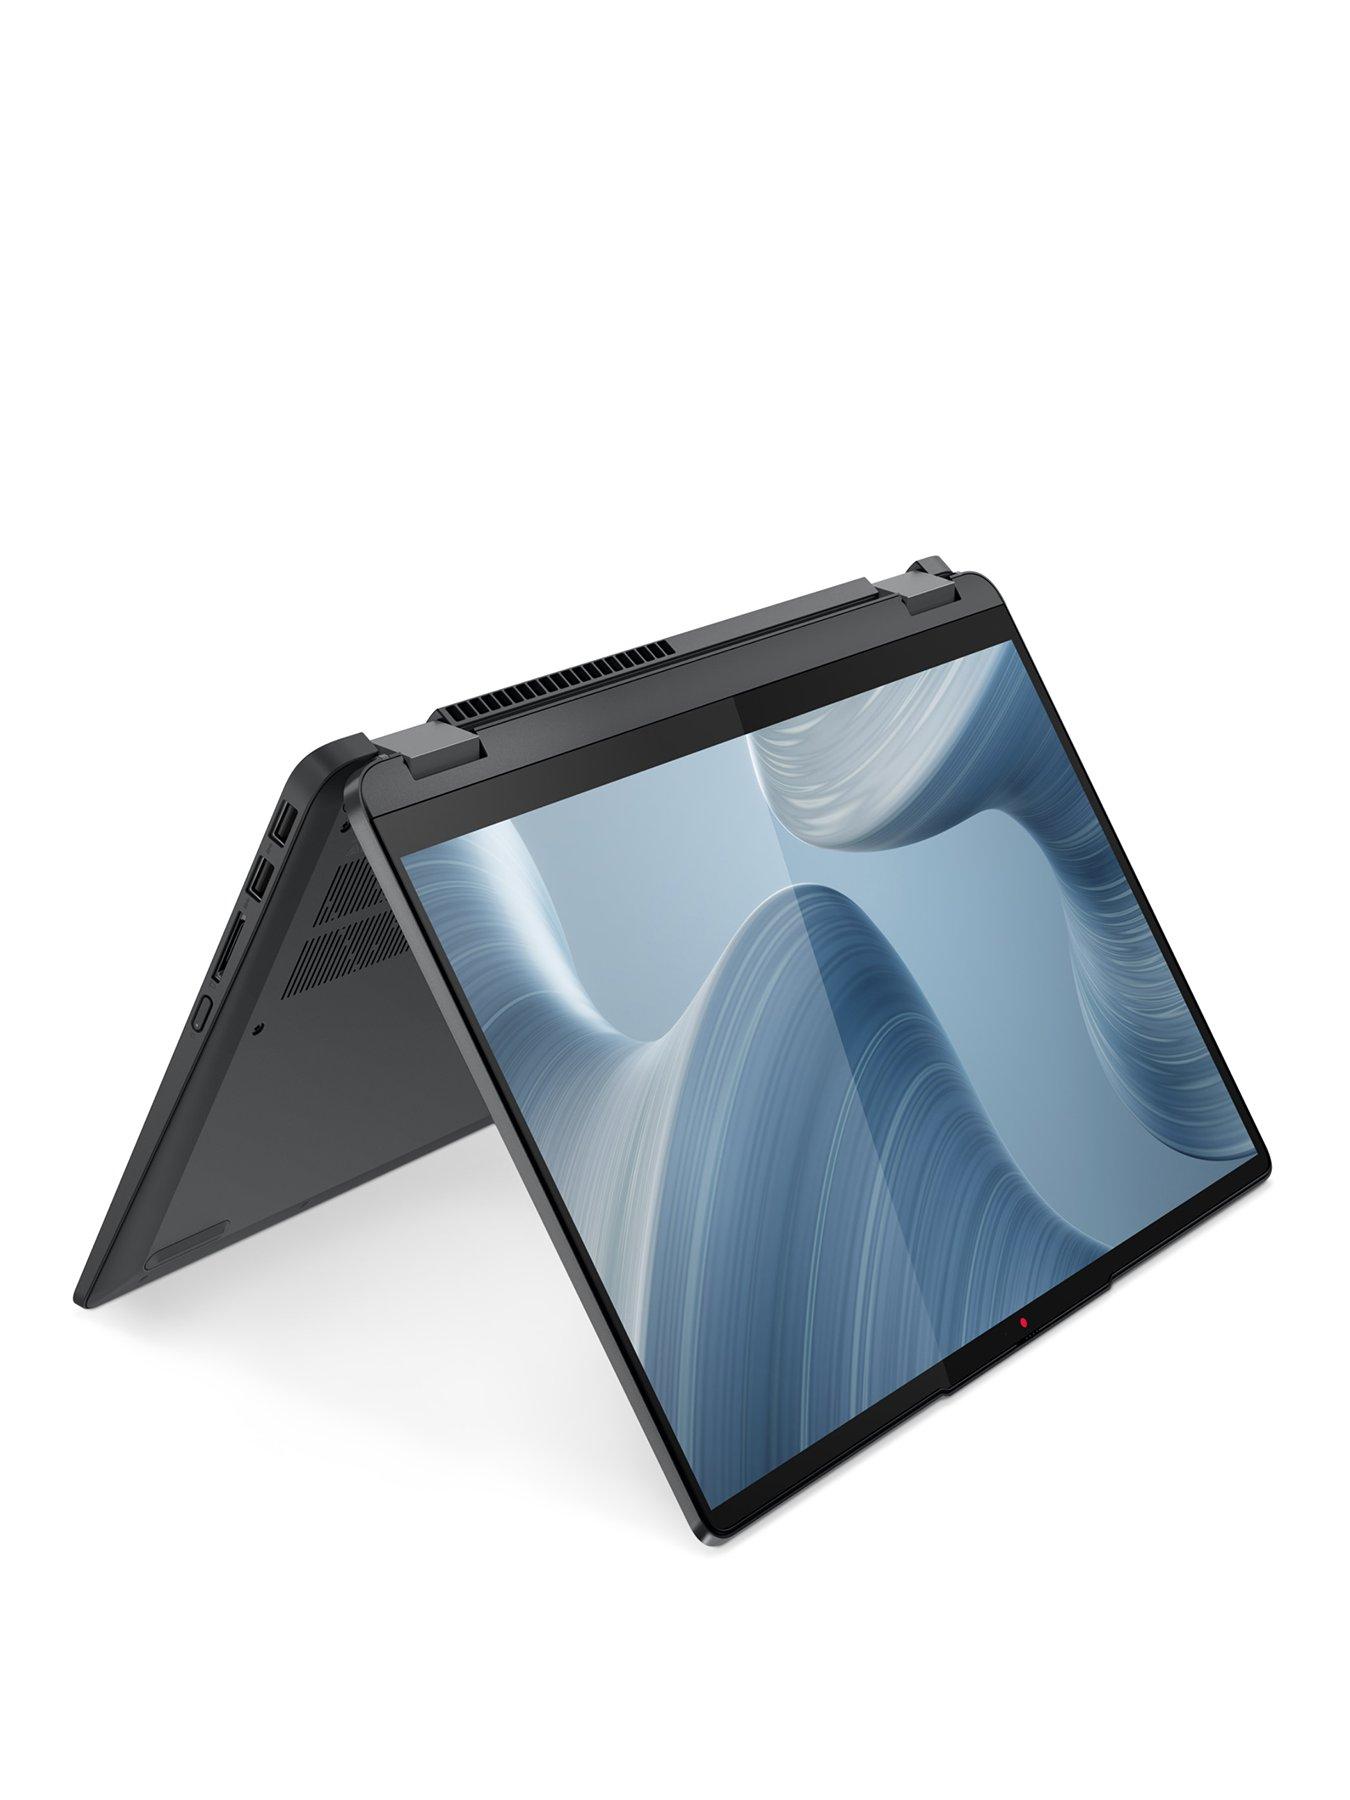 Lenovo IdeaPad Flex 5 Laptop - 14in FHD+ Touchscreen, AMD Ryzen 5